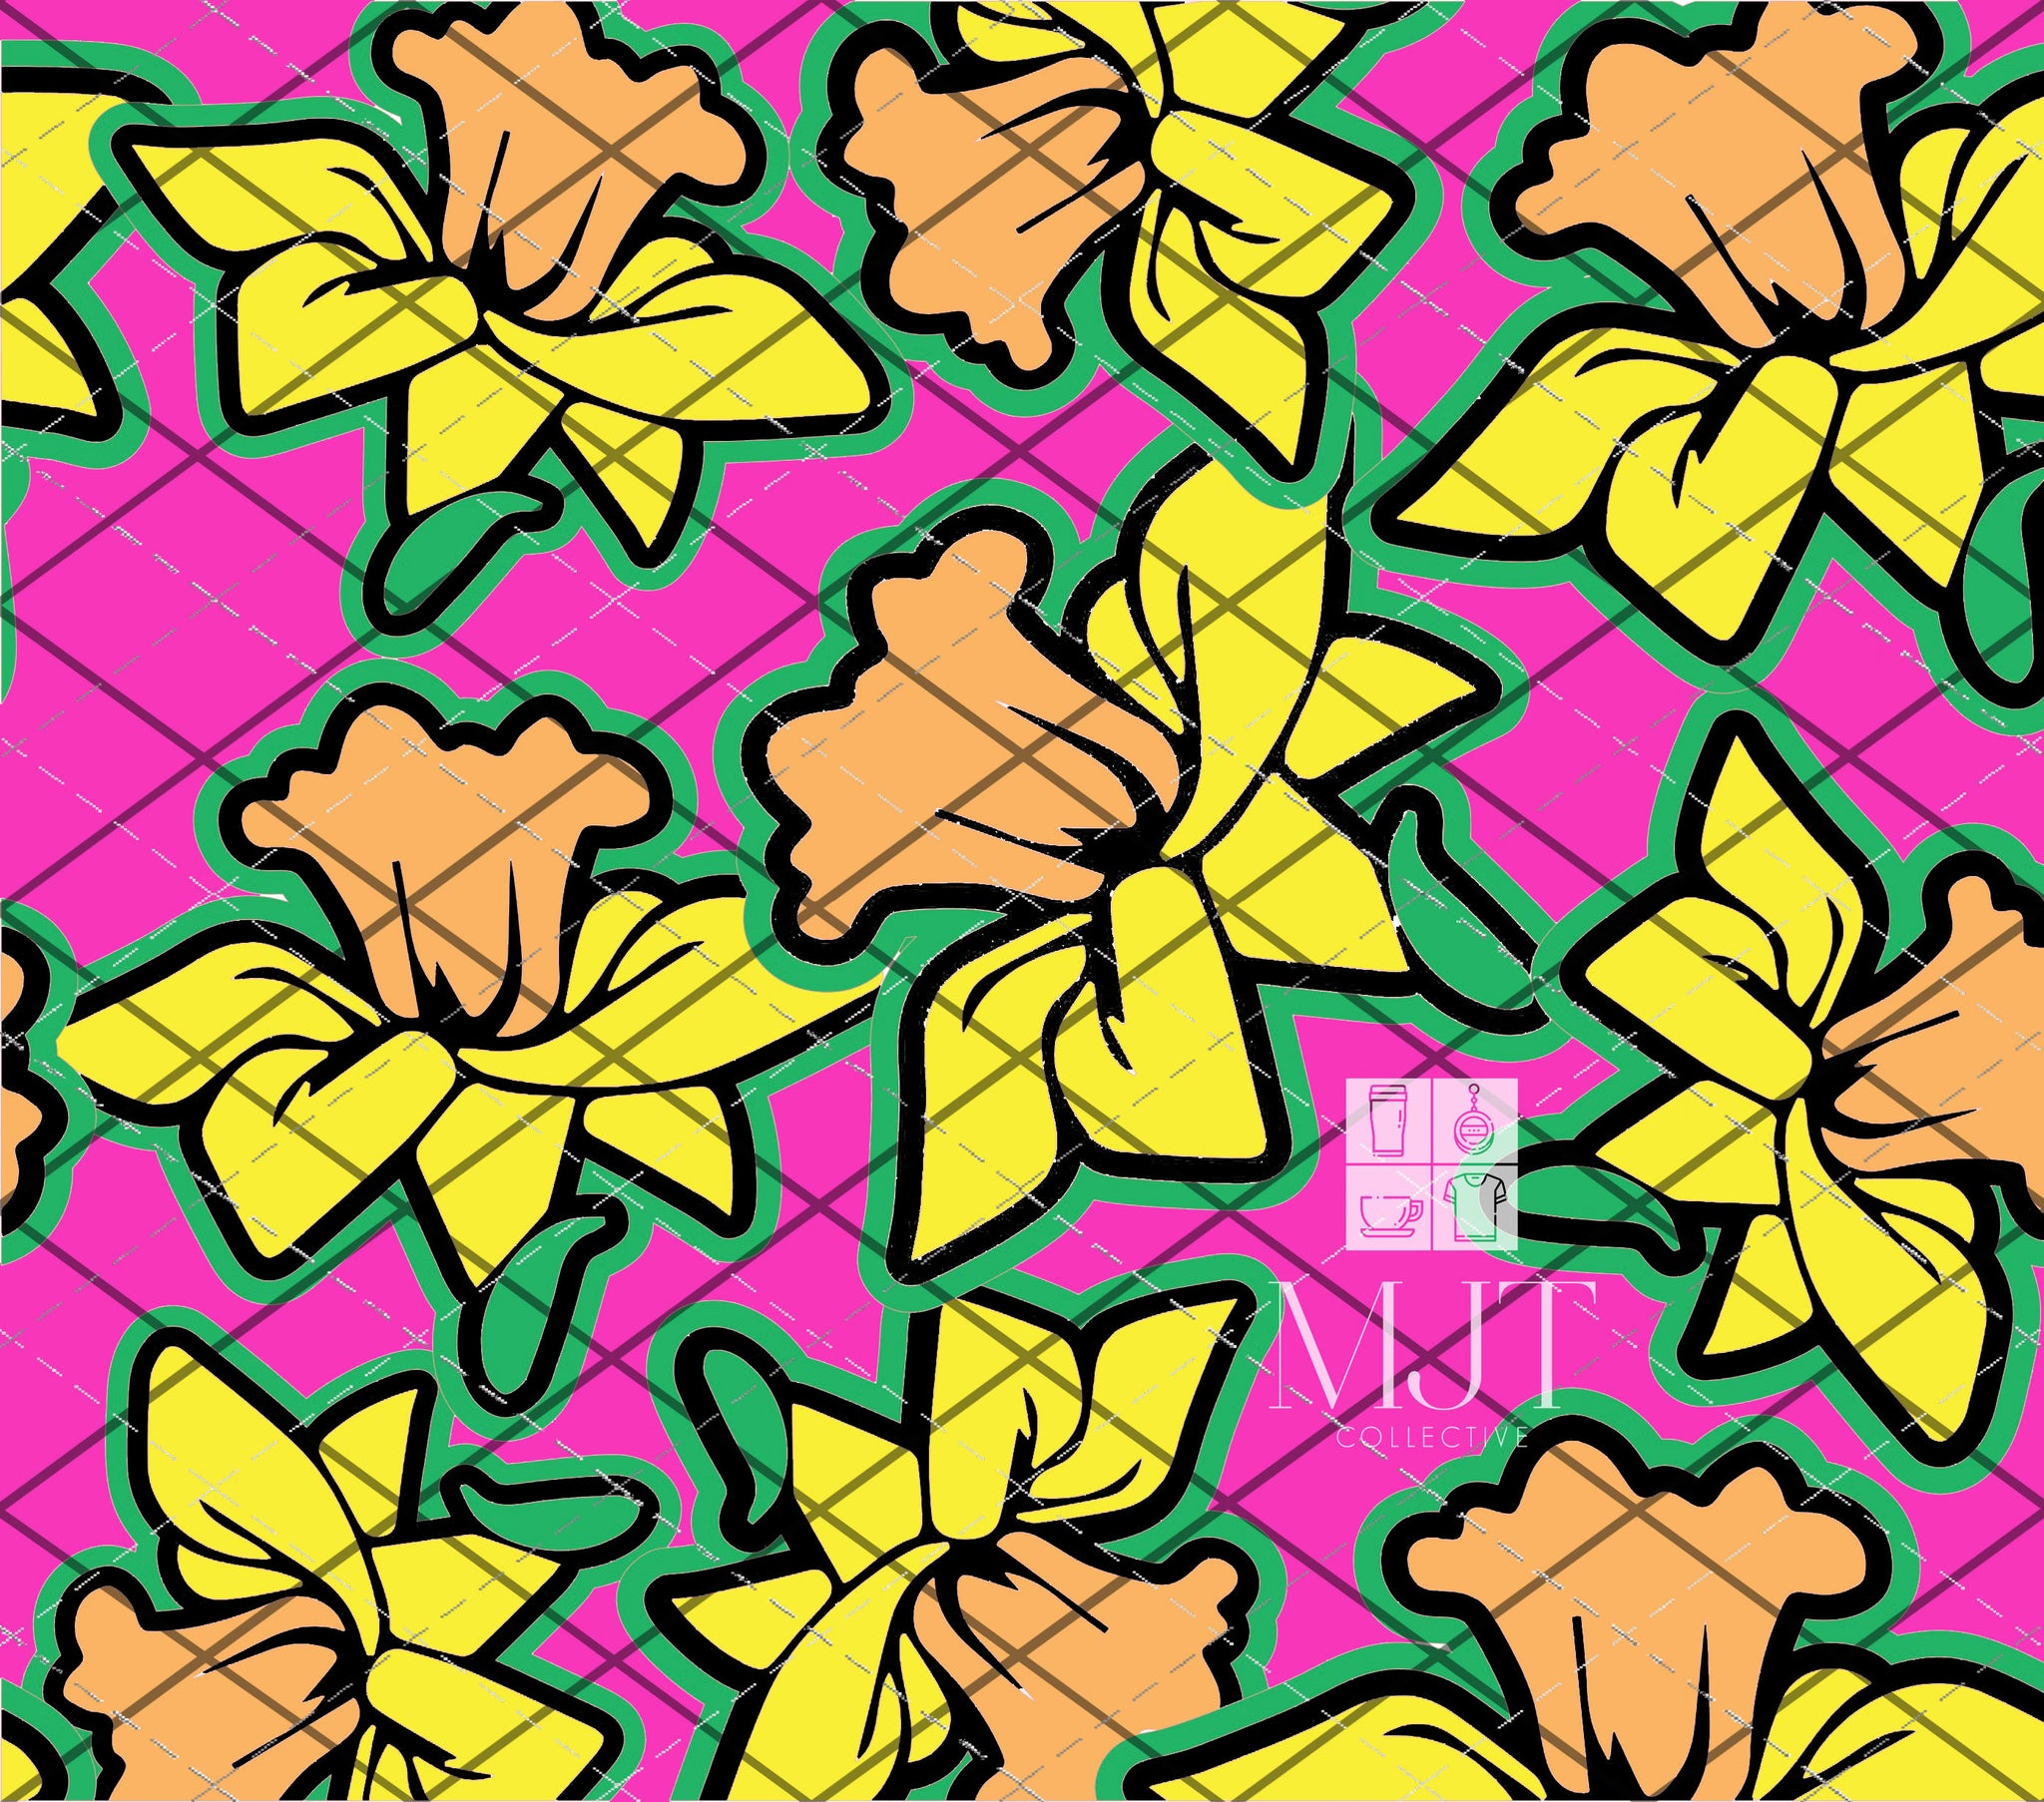 Daffodil Burst - seamless cut SVG File